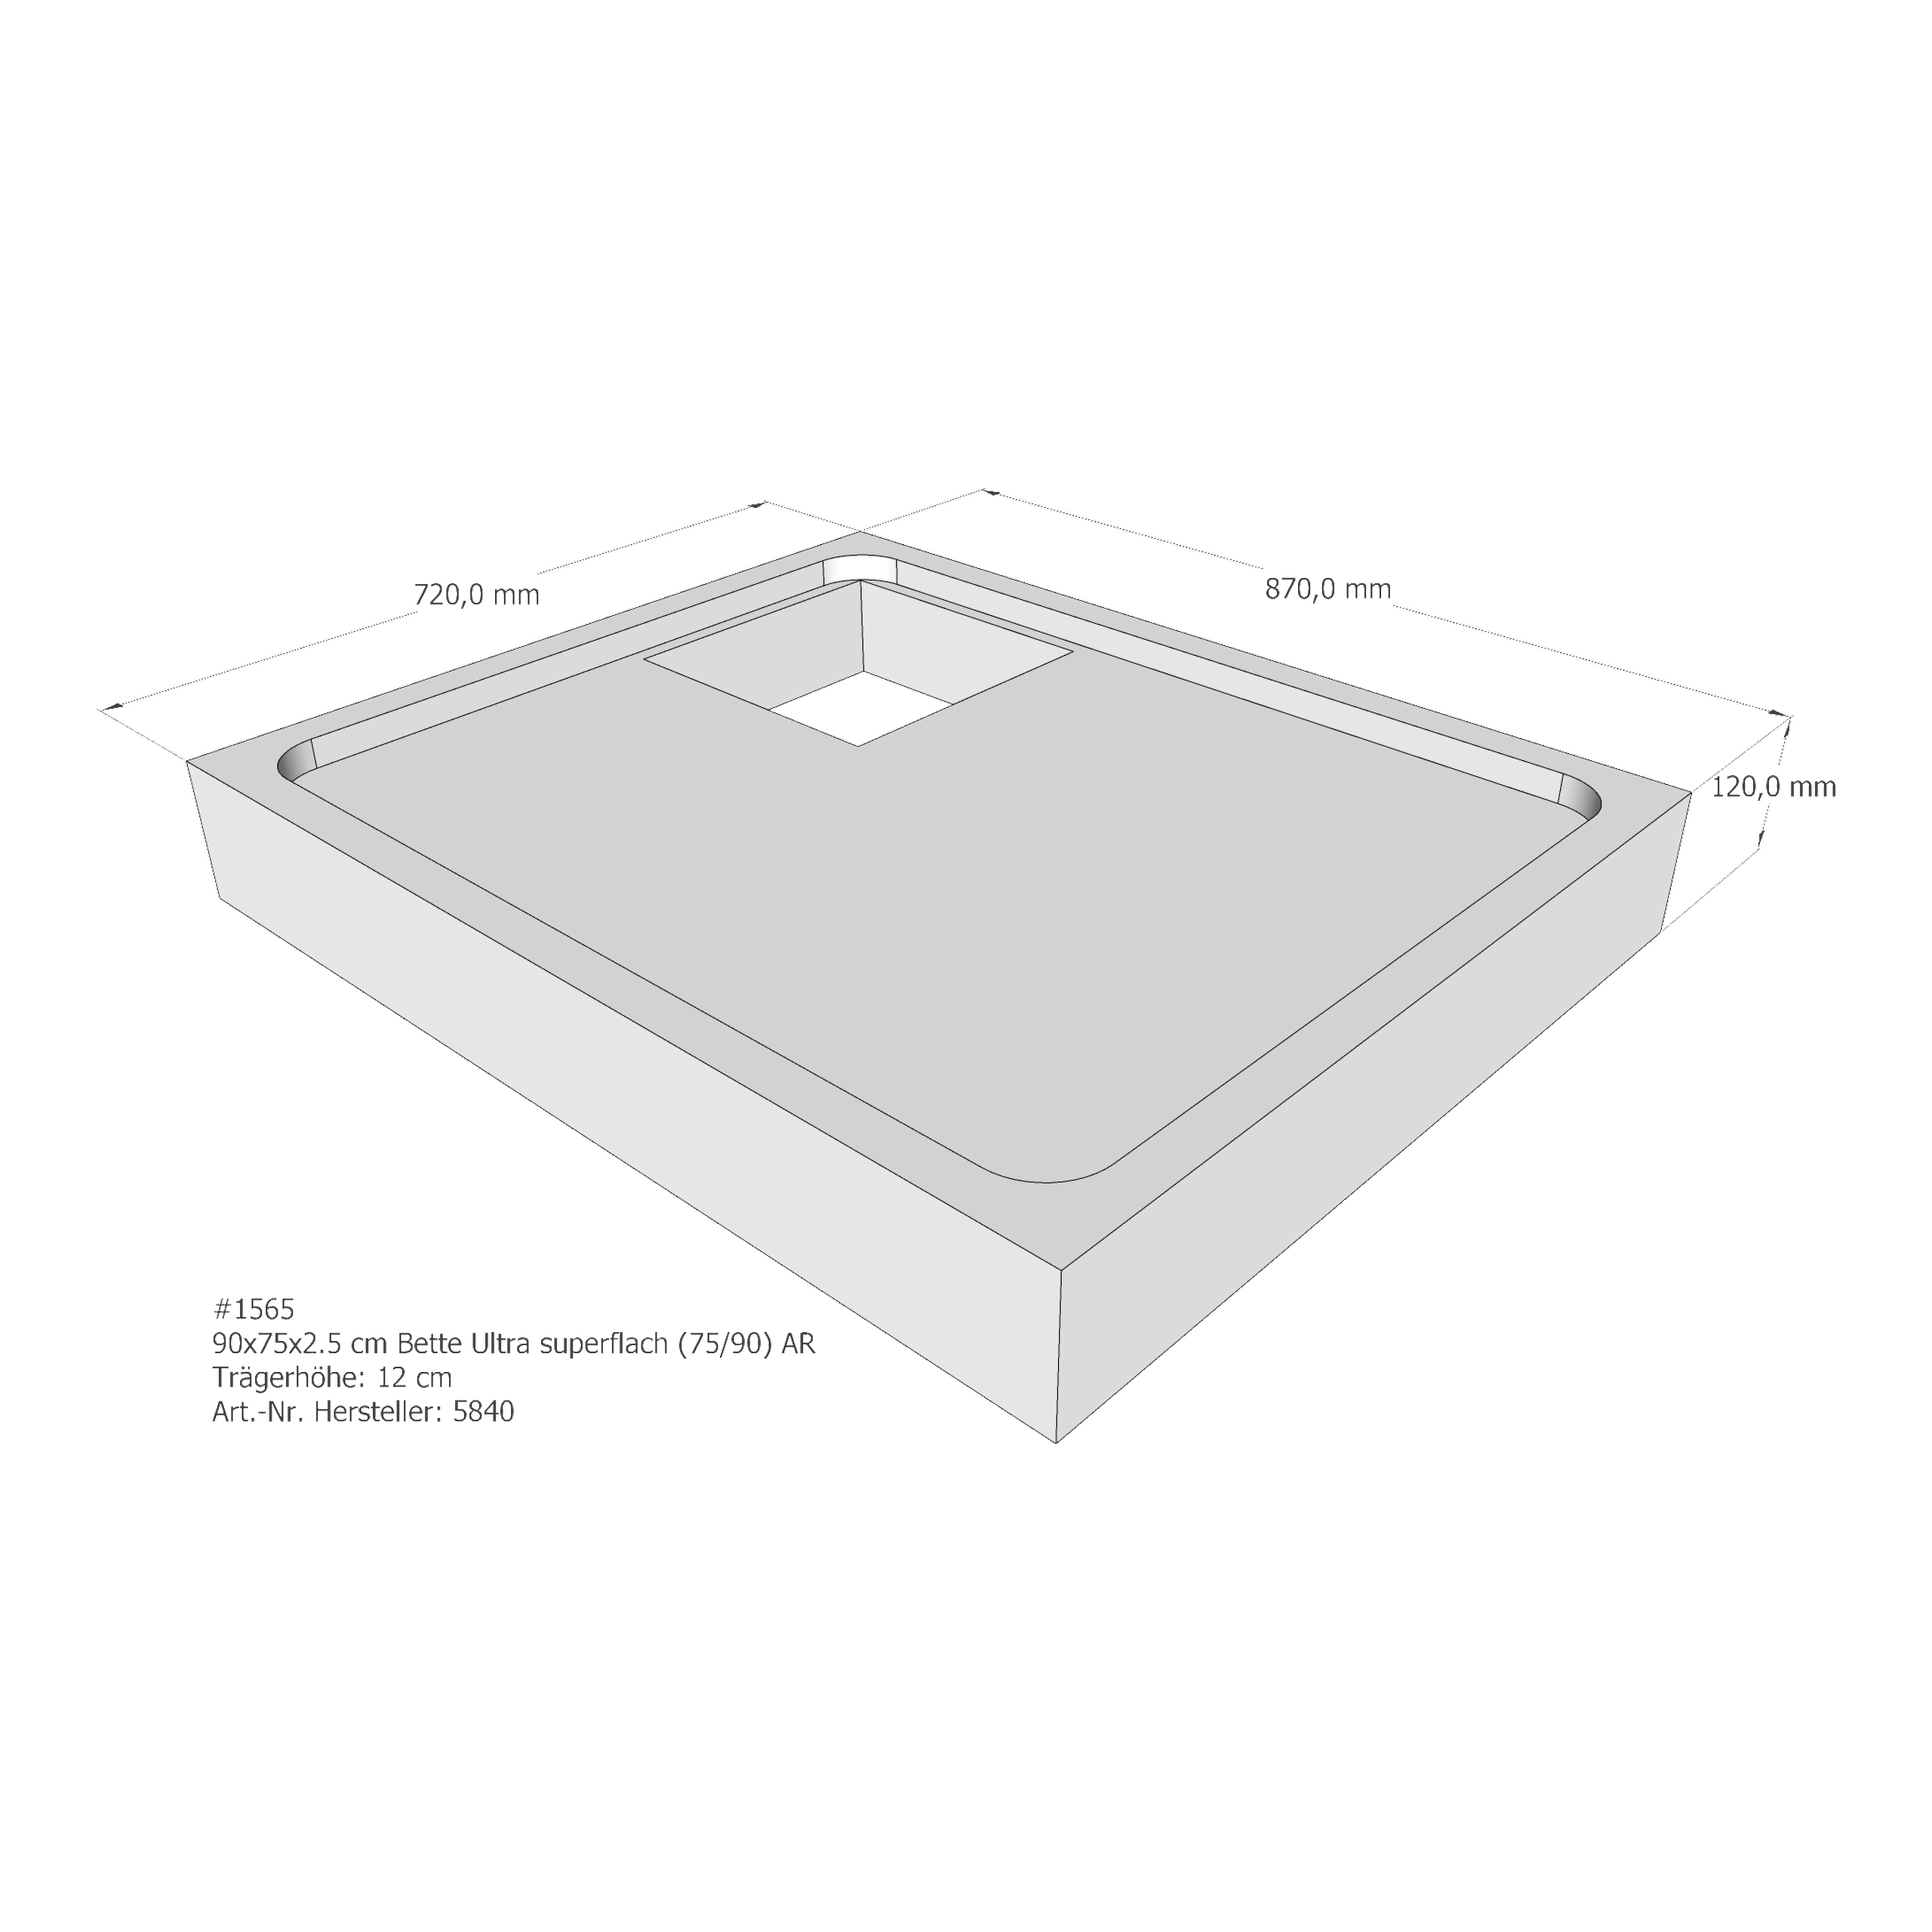 Duschwannenträger für Bette BetteUltra (superflach) 90 × 75 × 2,5 cm